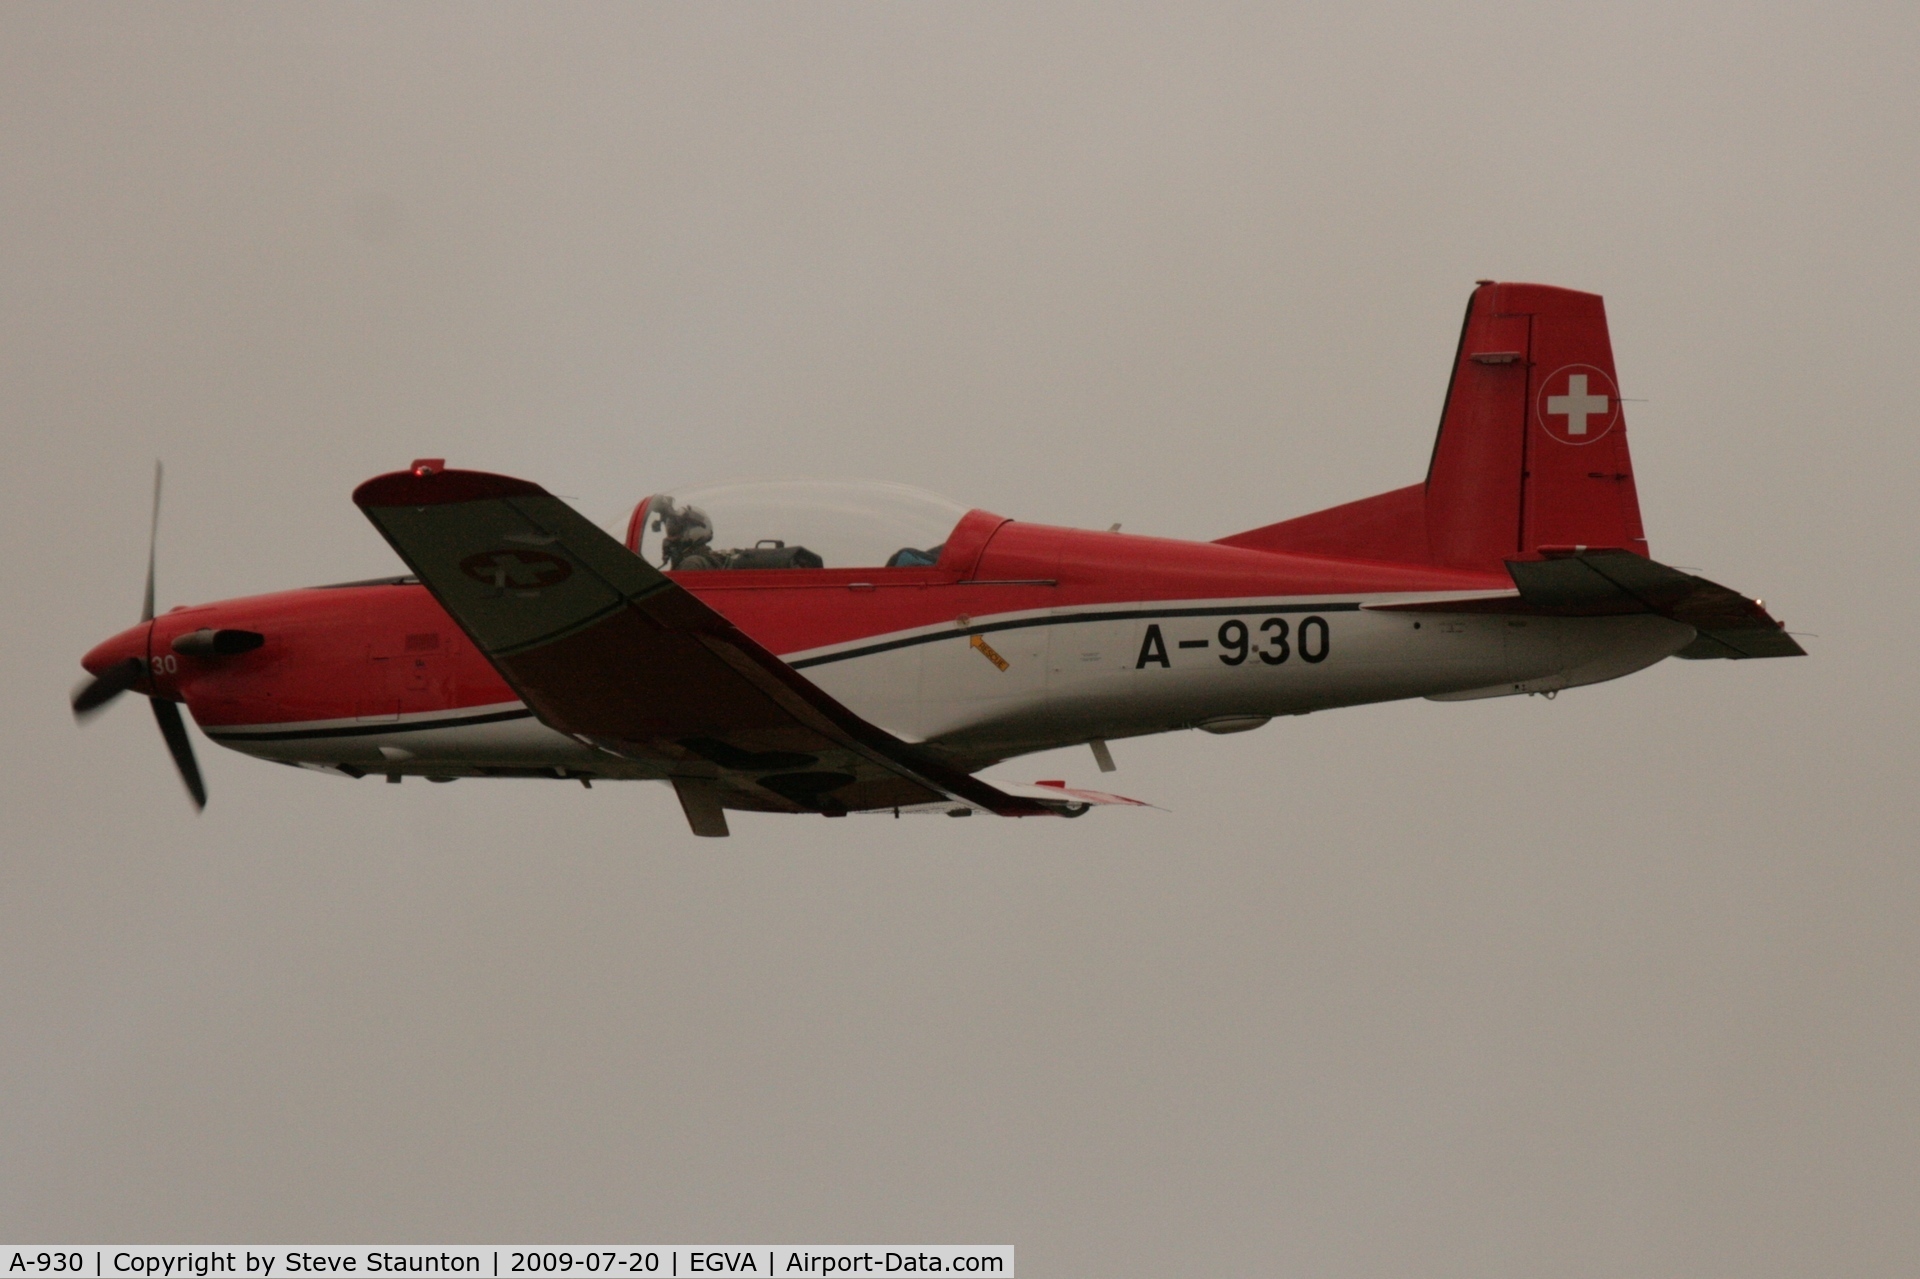 A-930, 1983 Pilatus PC-7 Turbo Trainer C/N 338, Taken at the Royal International Air Tattoo 2009